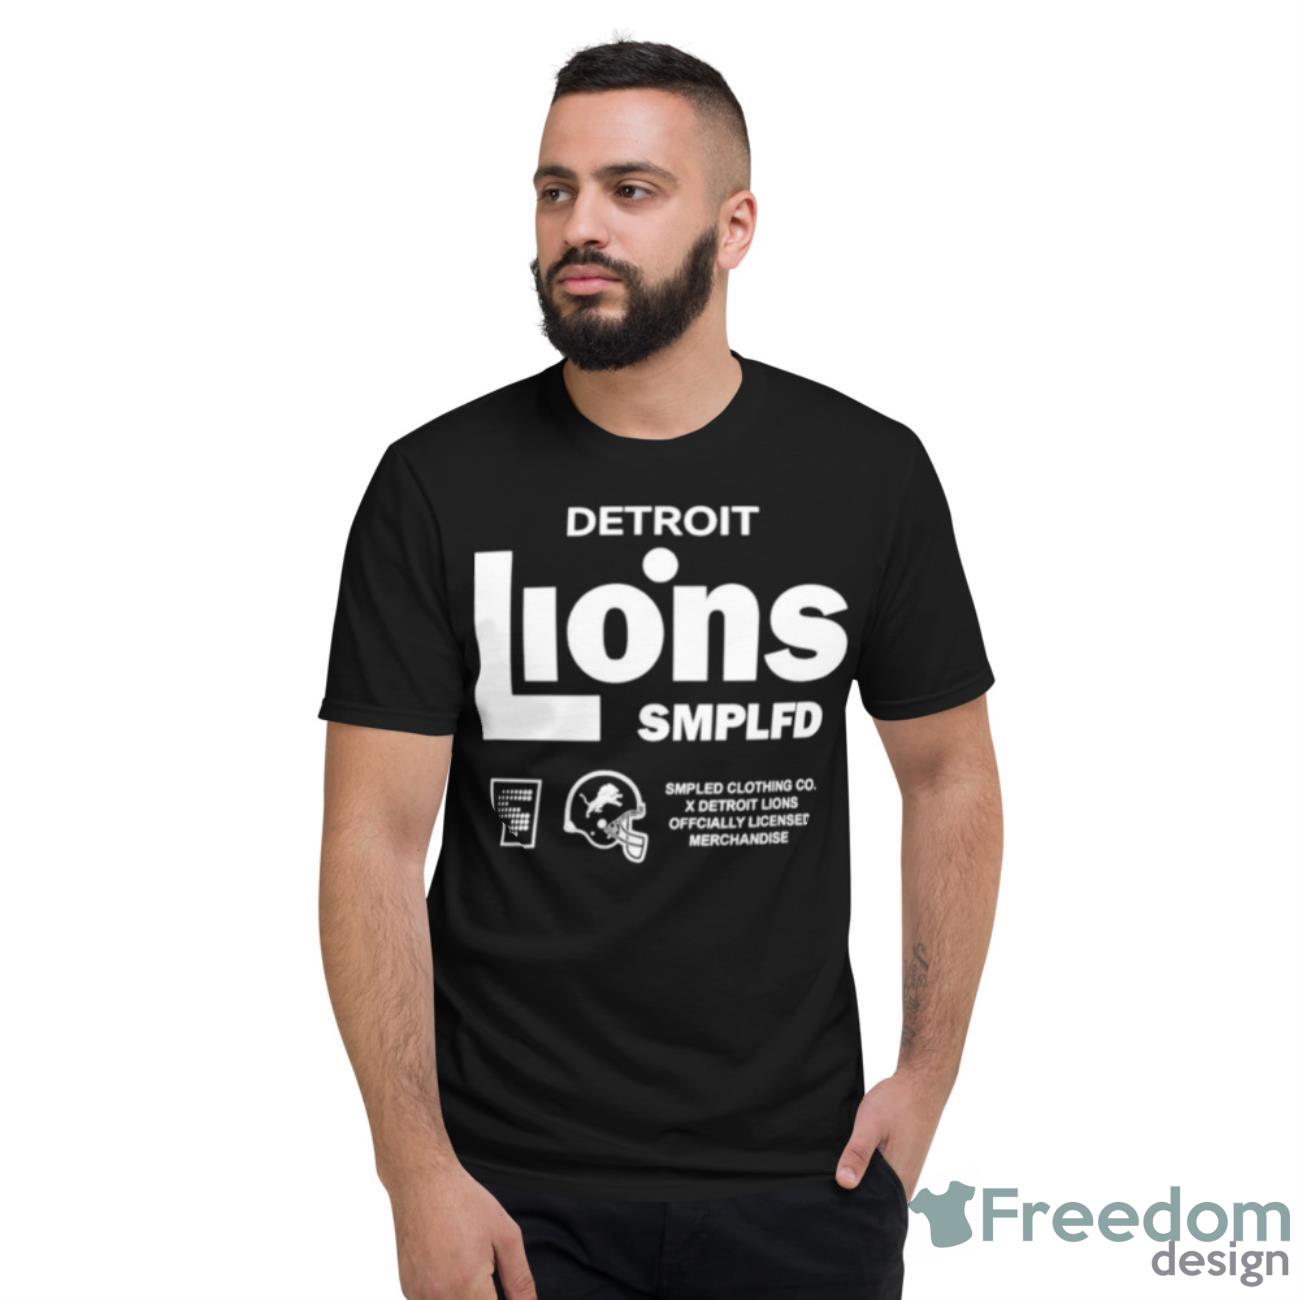 Detroit Lions SMPLFD 2023 Shirt - Freedomdesign